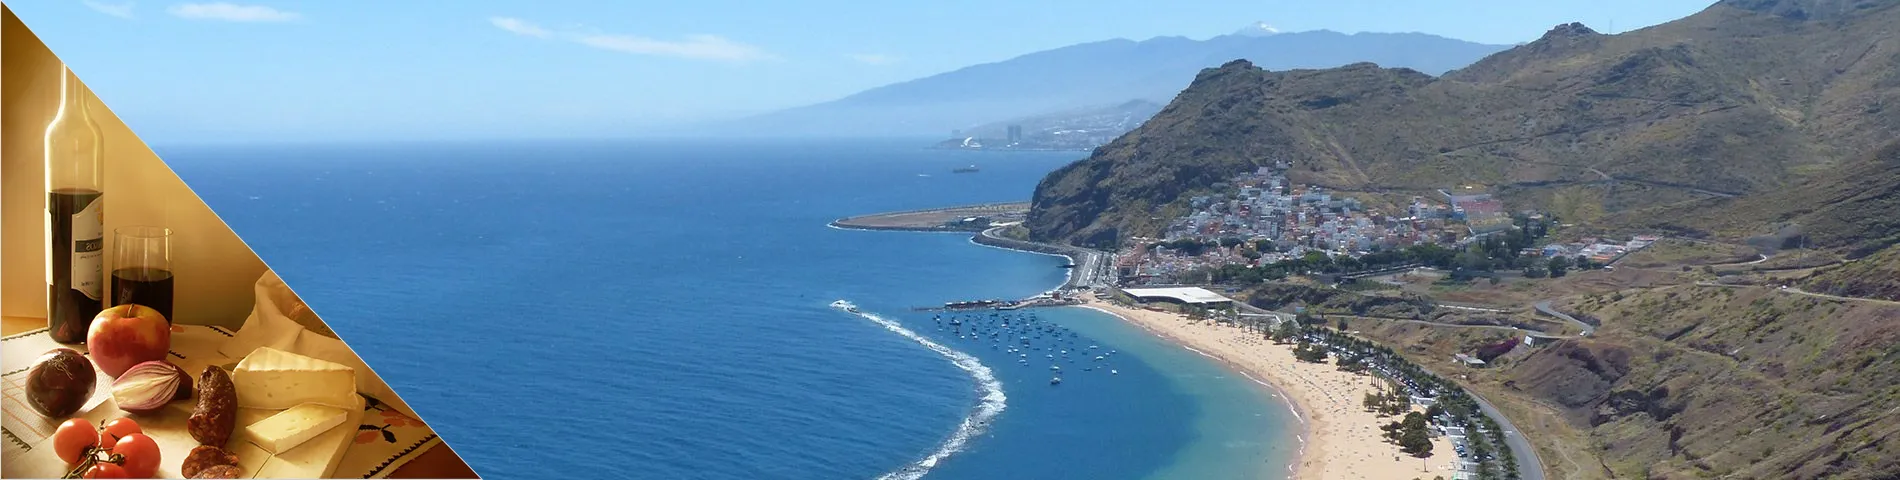 Tenerife - Espanyol i Cultura